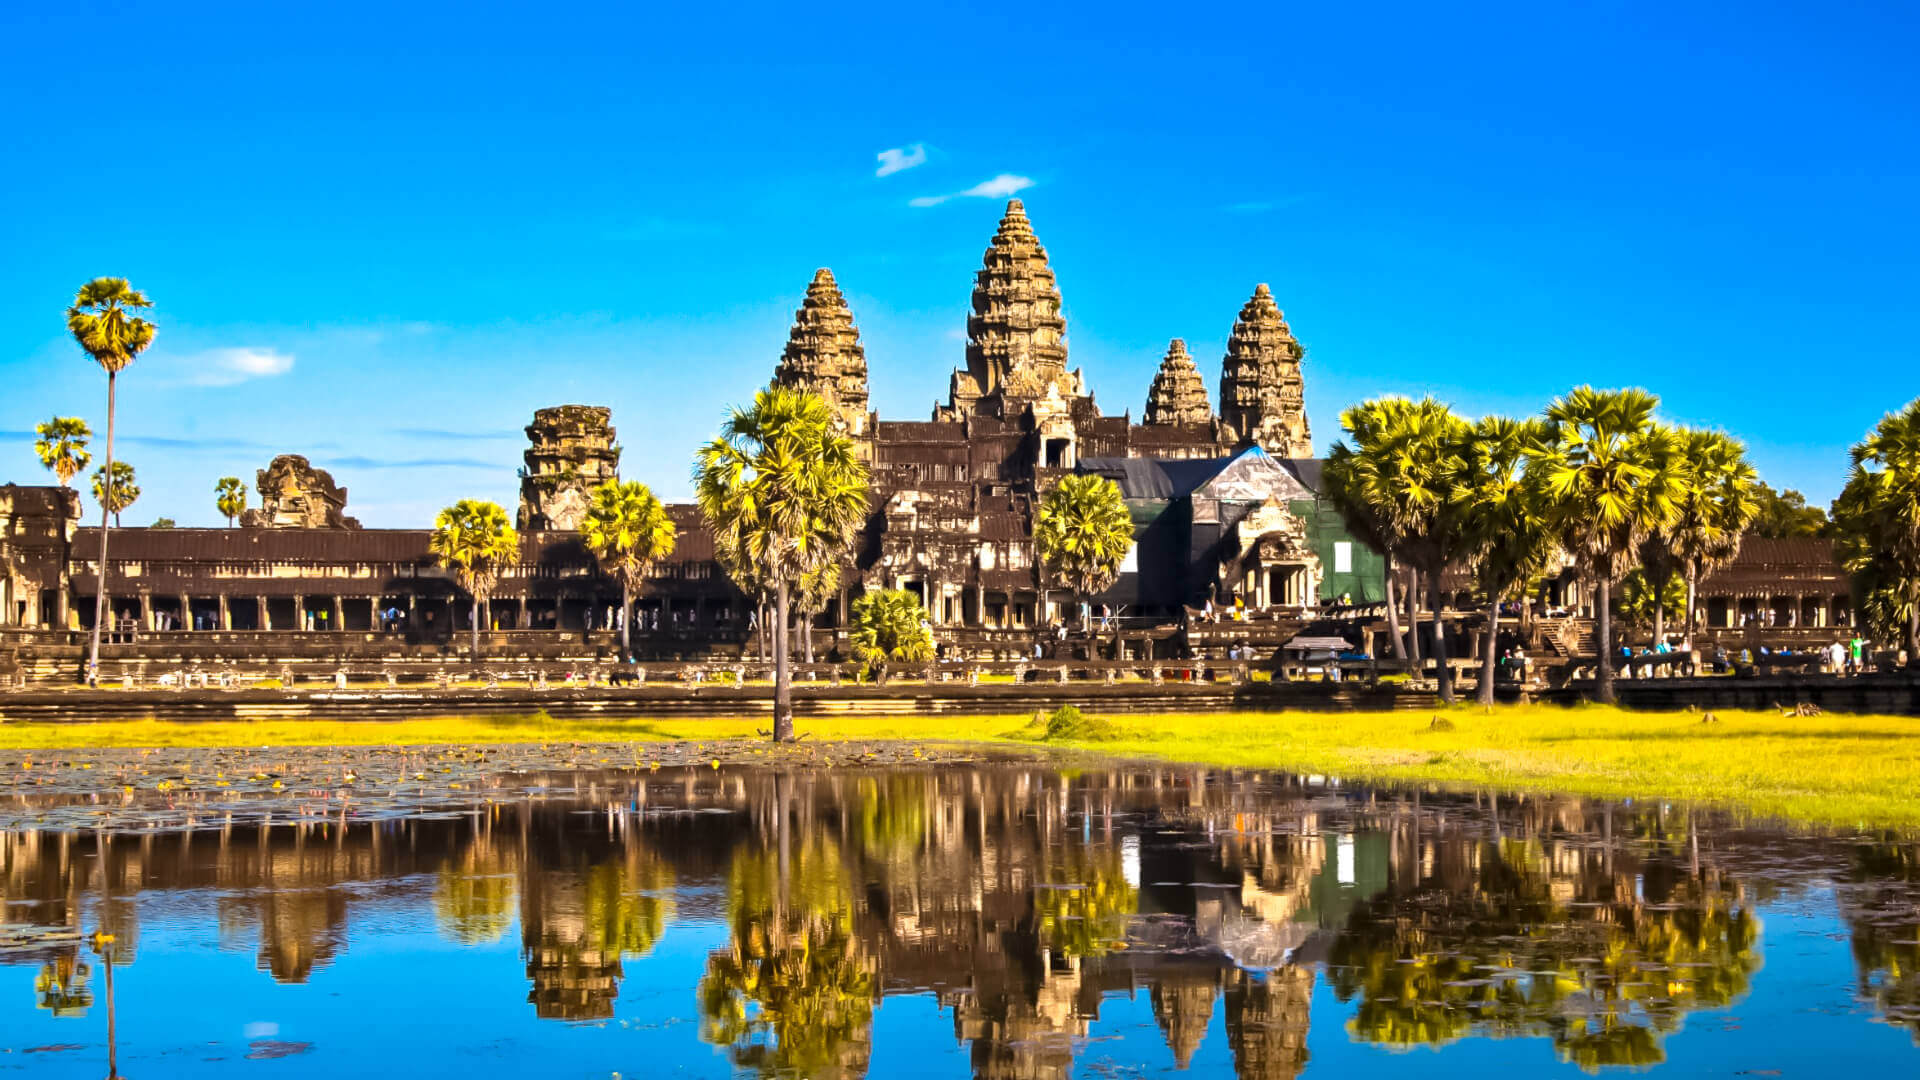 Cambodia travel guide - Travel S helper